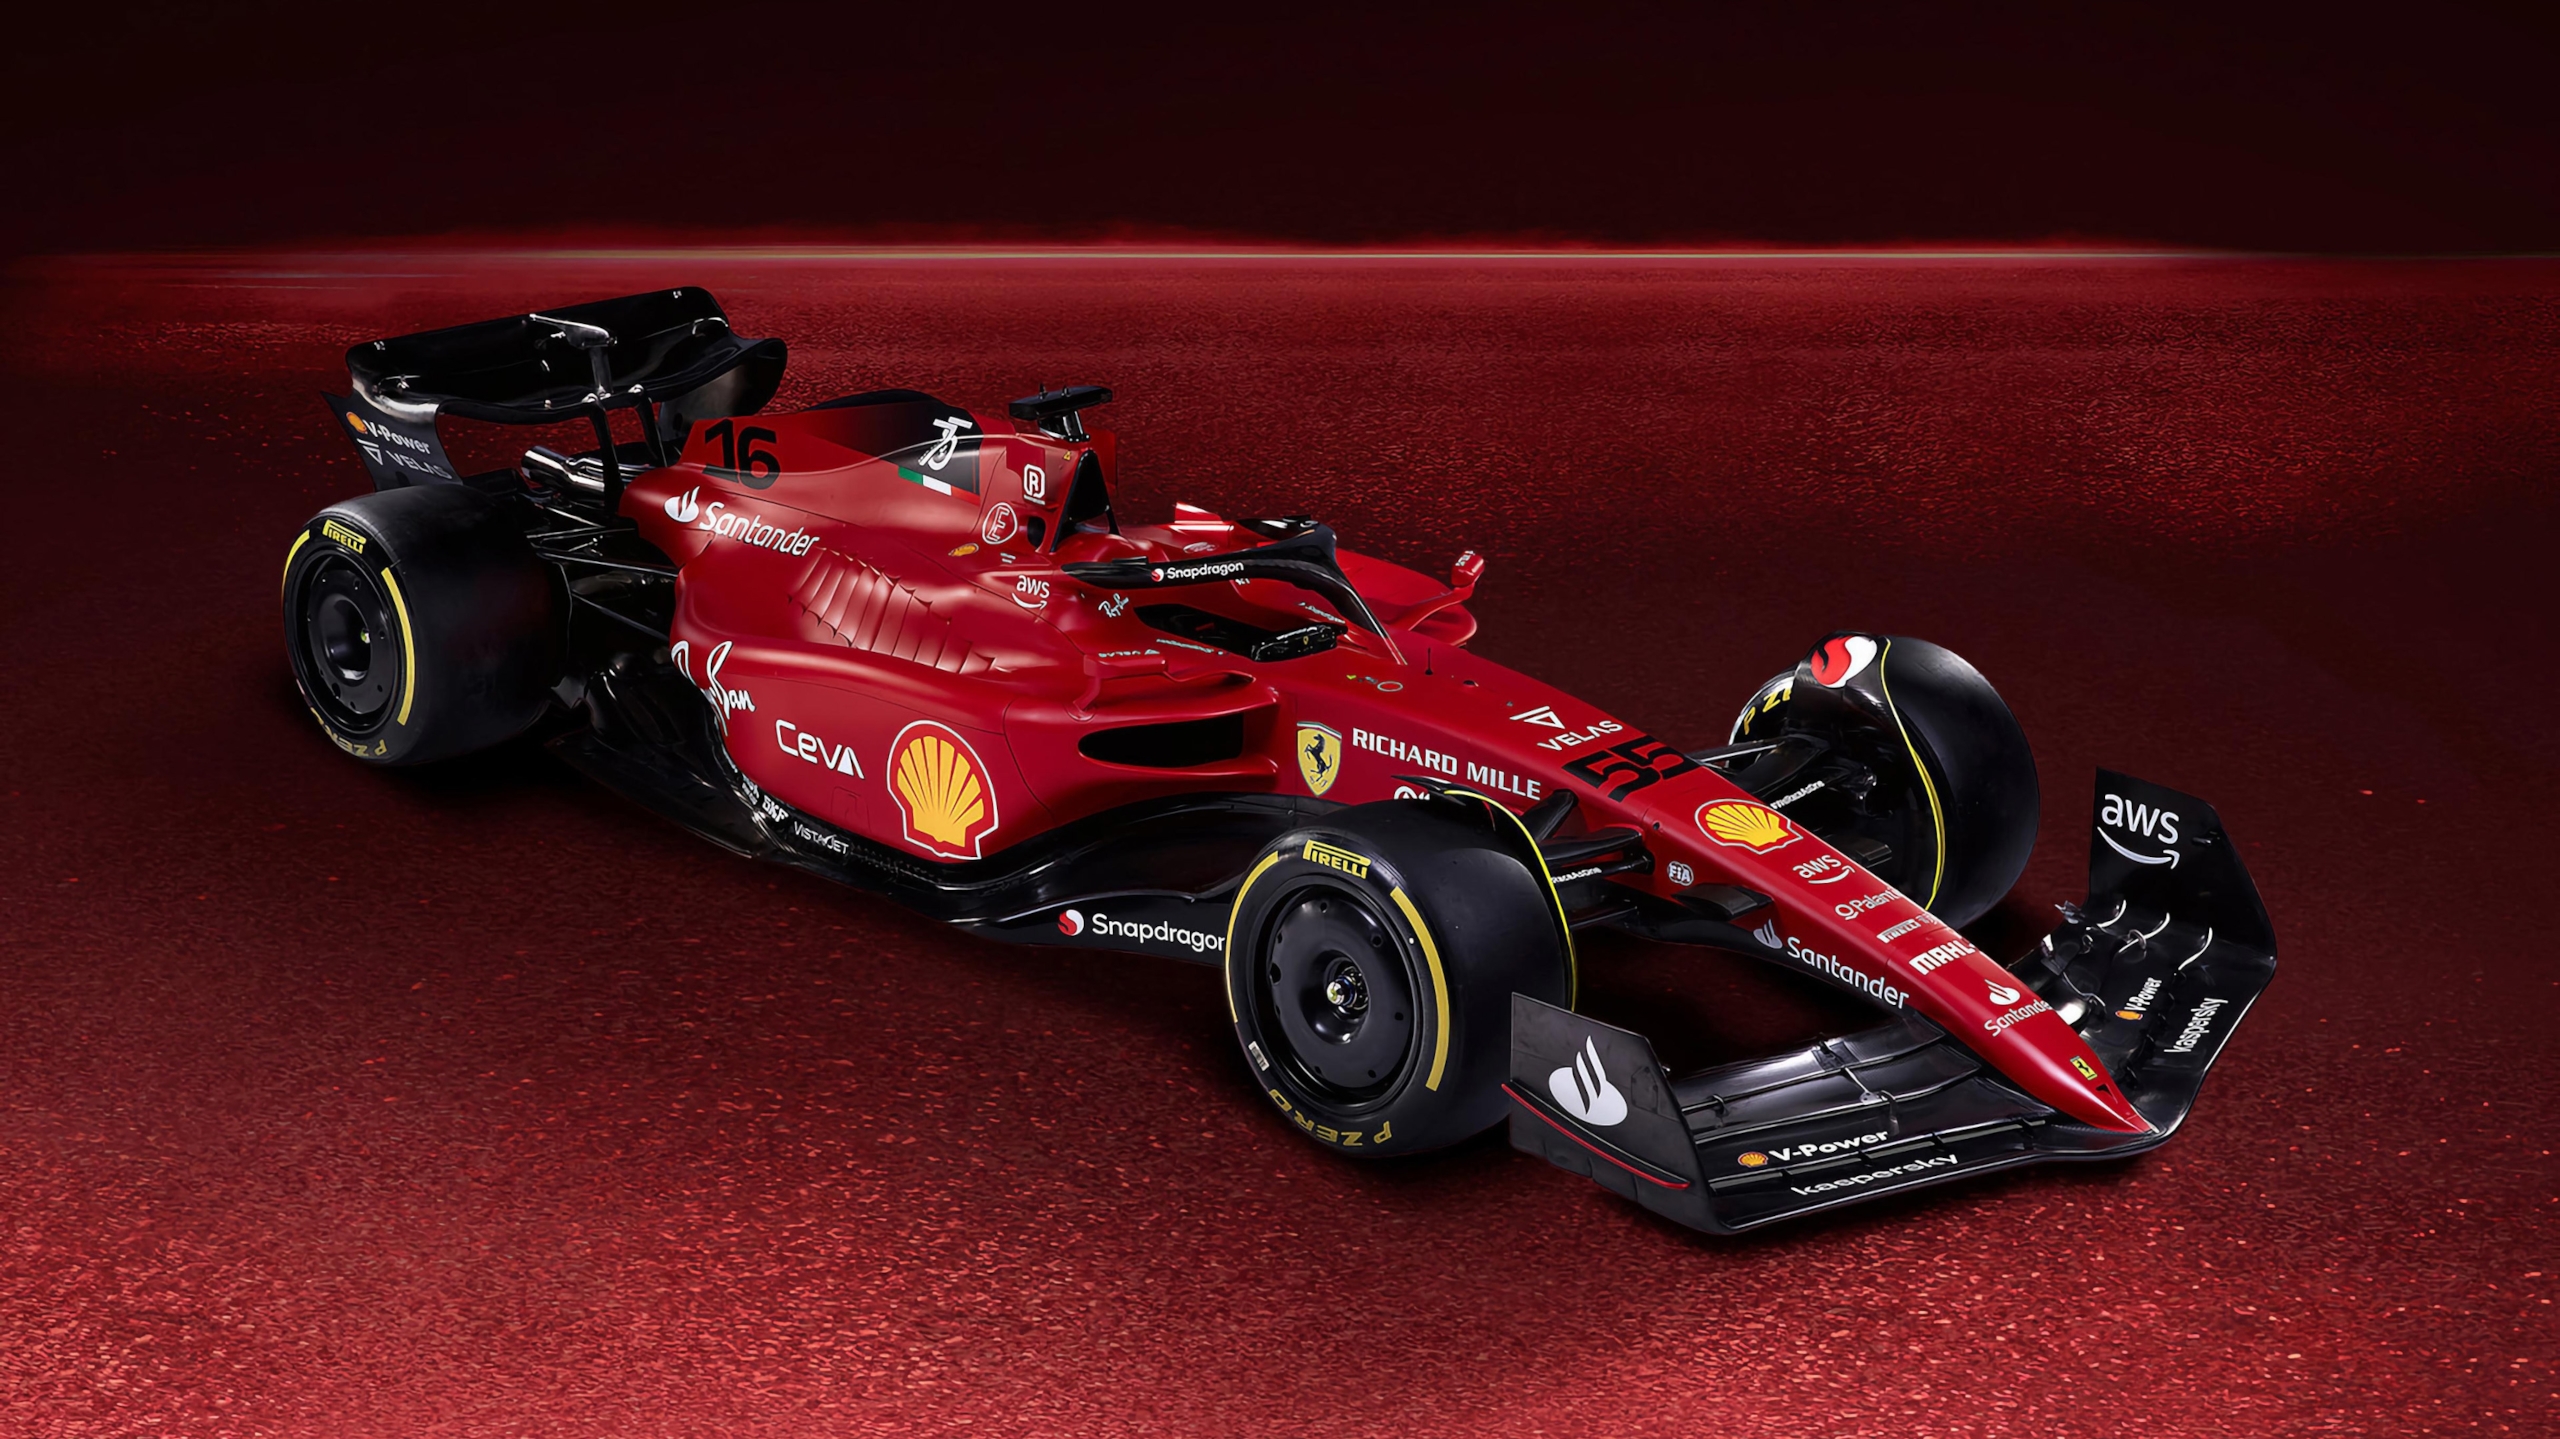 Ferrari F1 Wallpapers